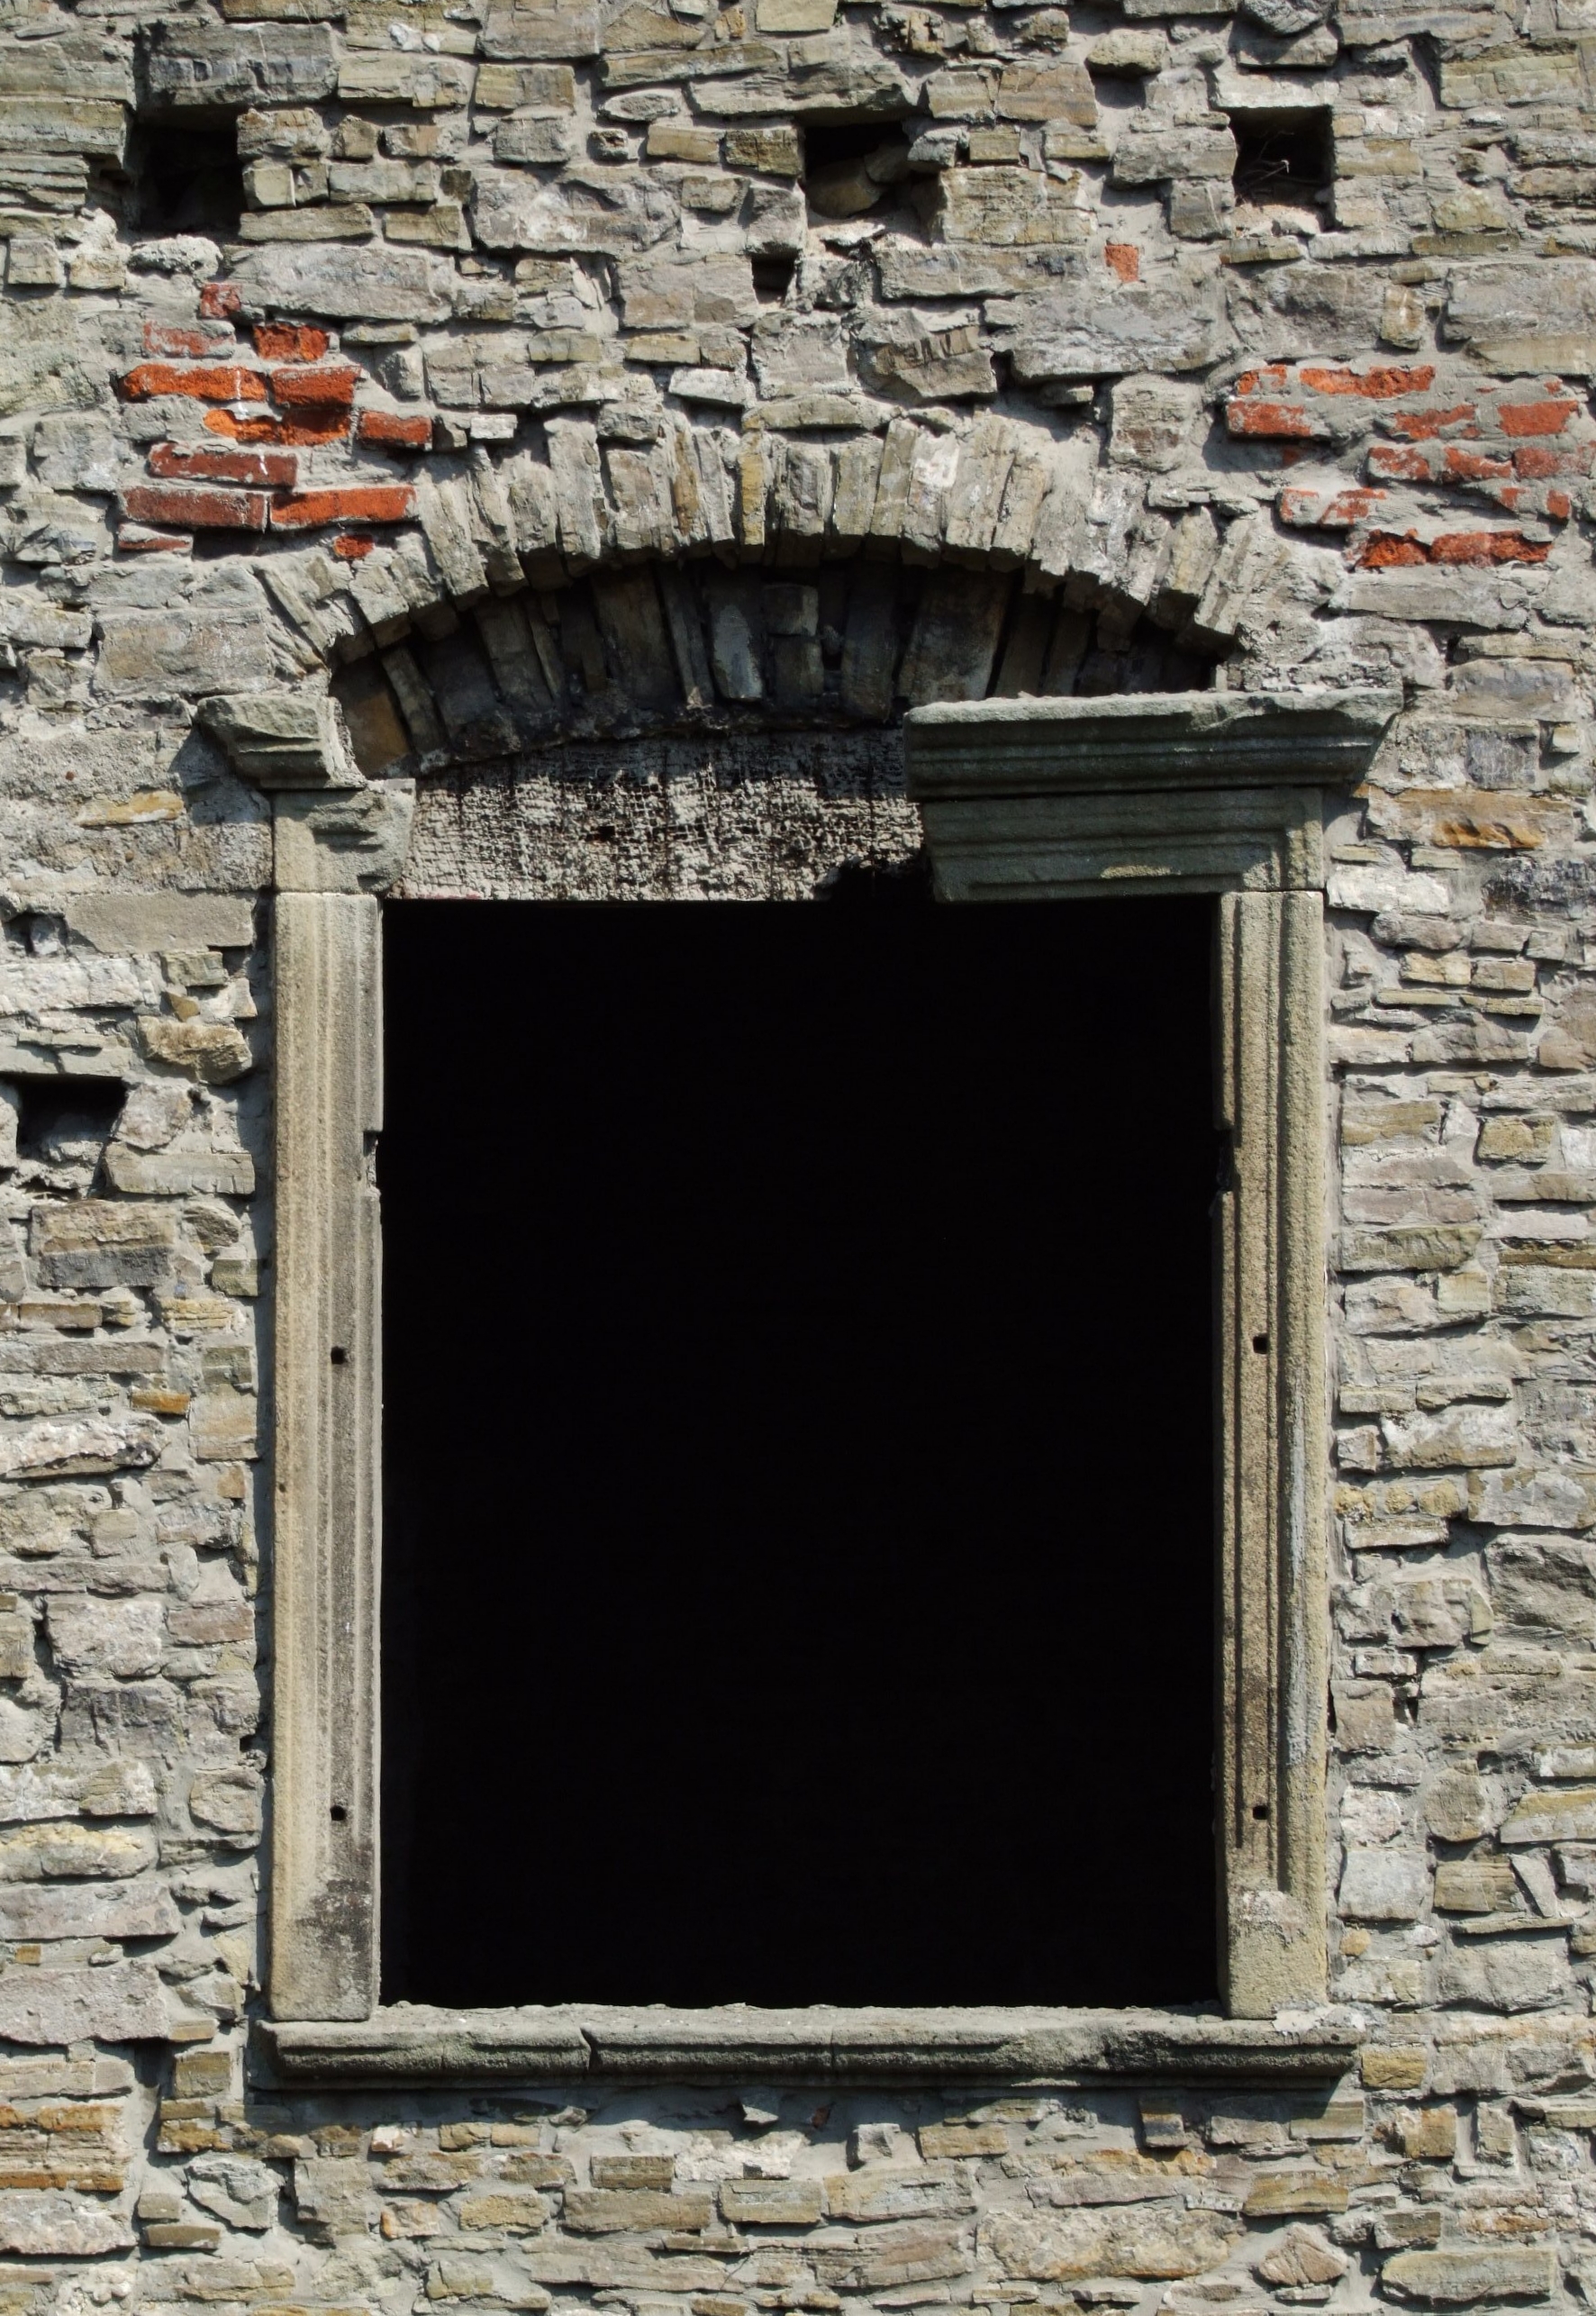 File:Hukvaldy castle - window.jpg - Wikimedia Commons